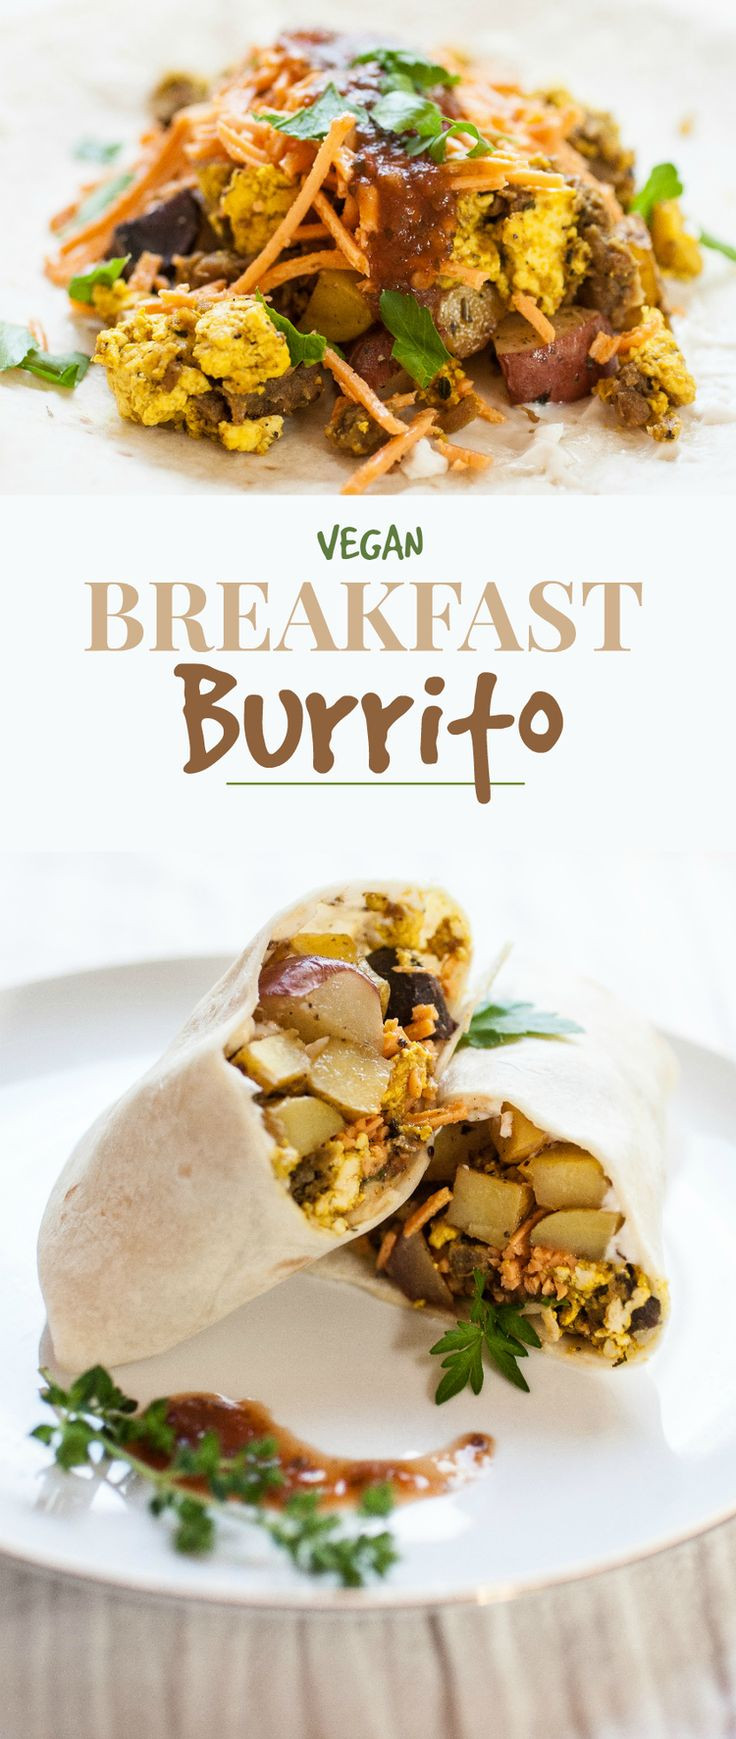 Vegetarian Breakfast Burrito Recipes
 Vegan Breakfast Burritos – Recipes From Pins